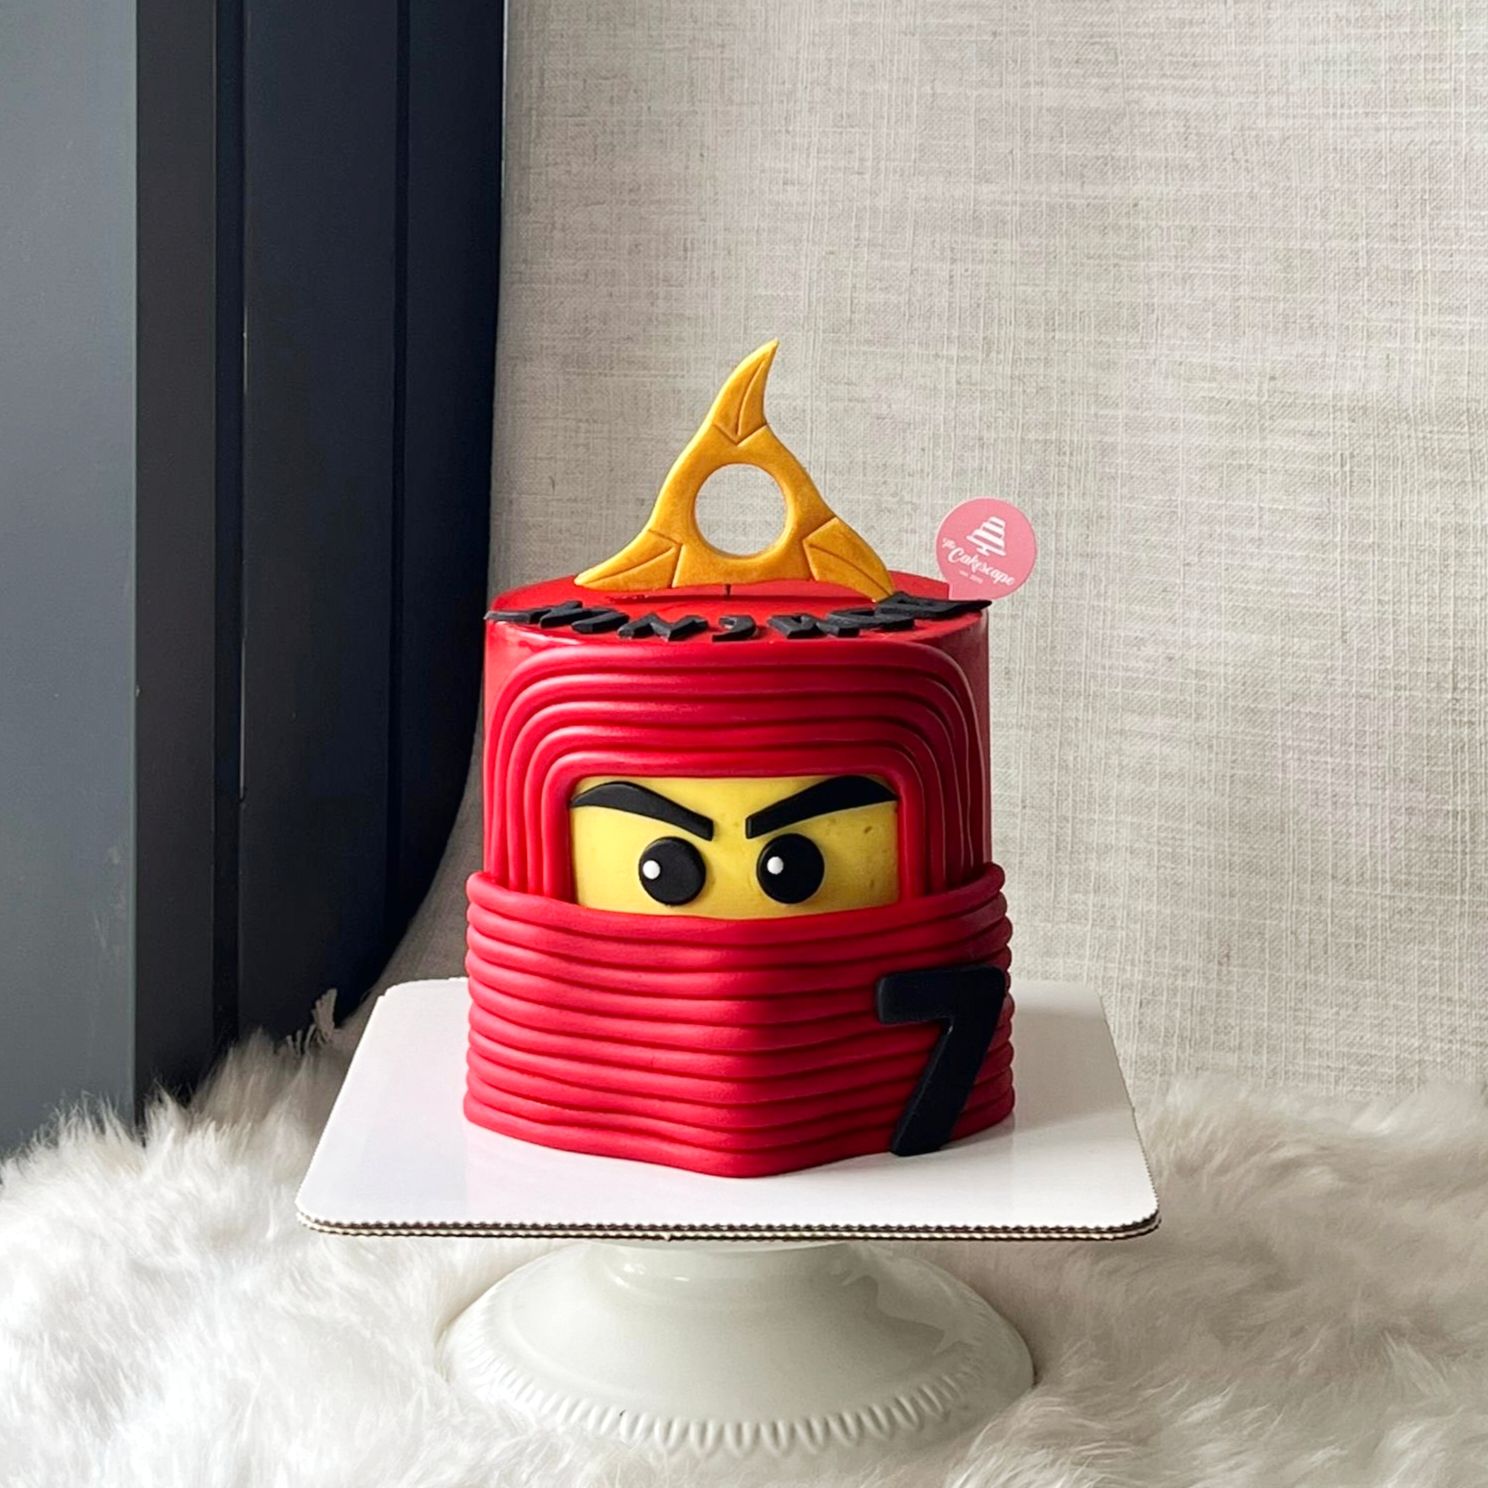 Lego Ninjago Cake 1